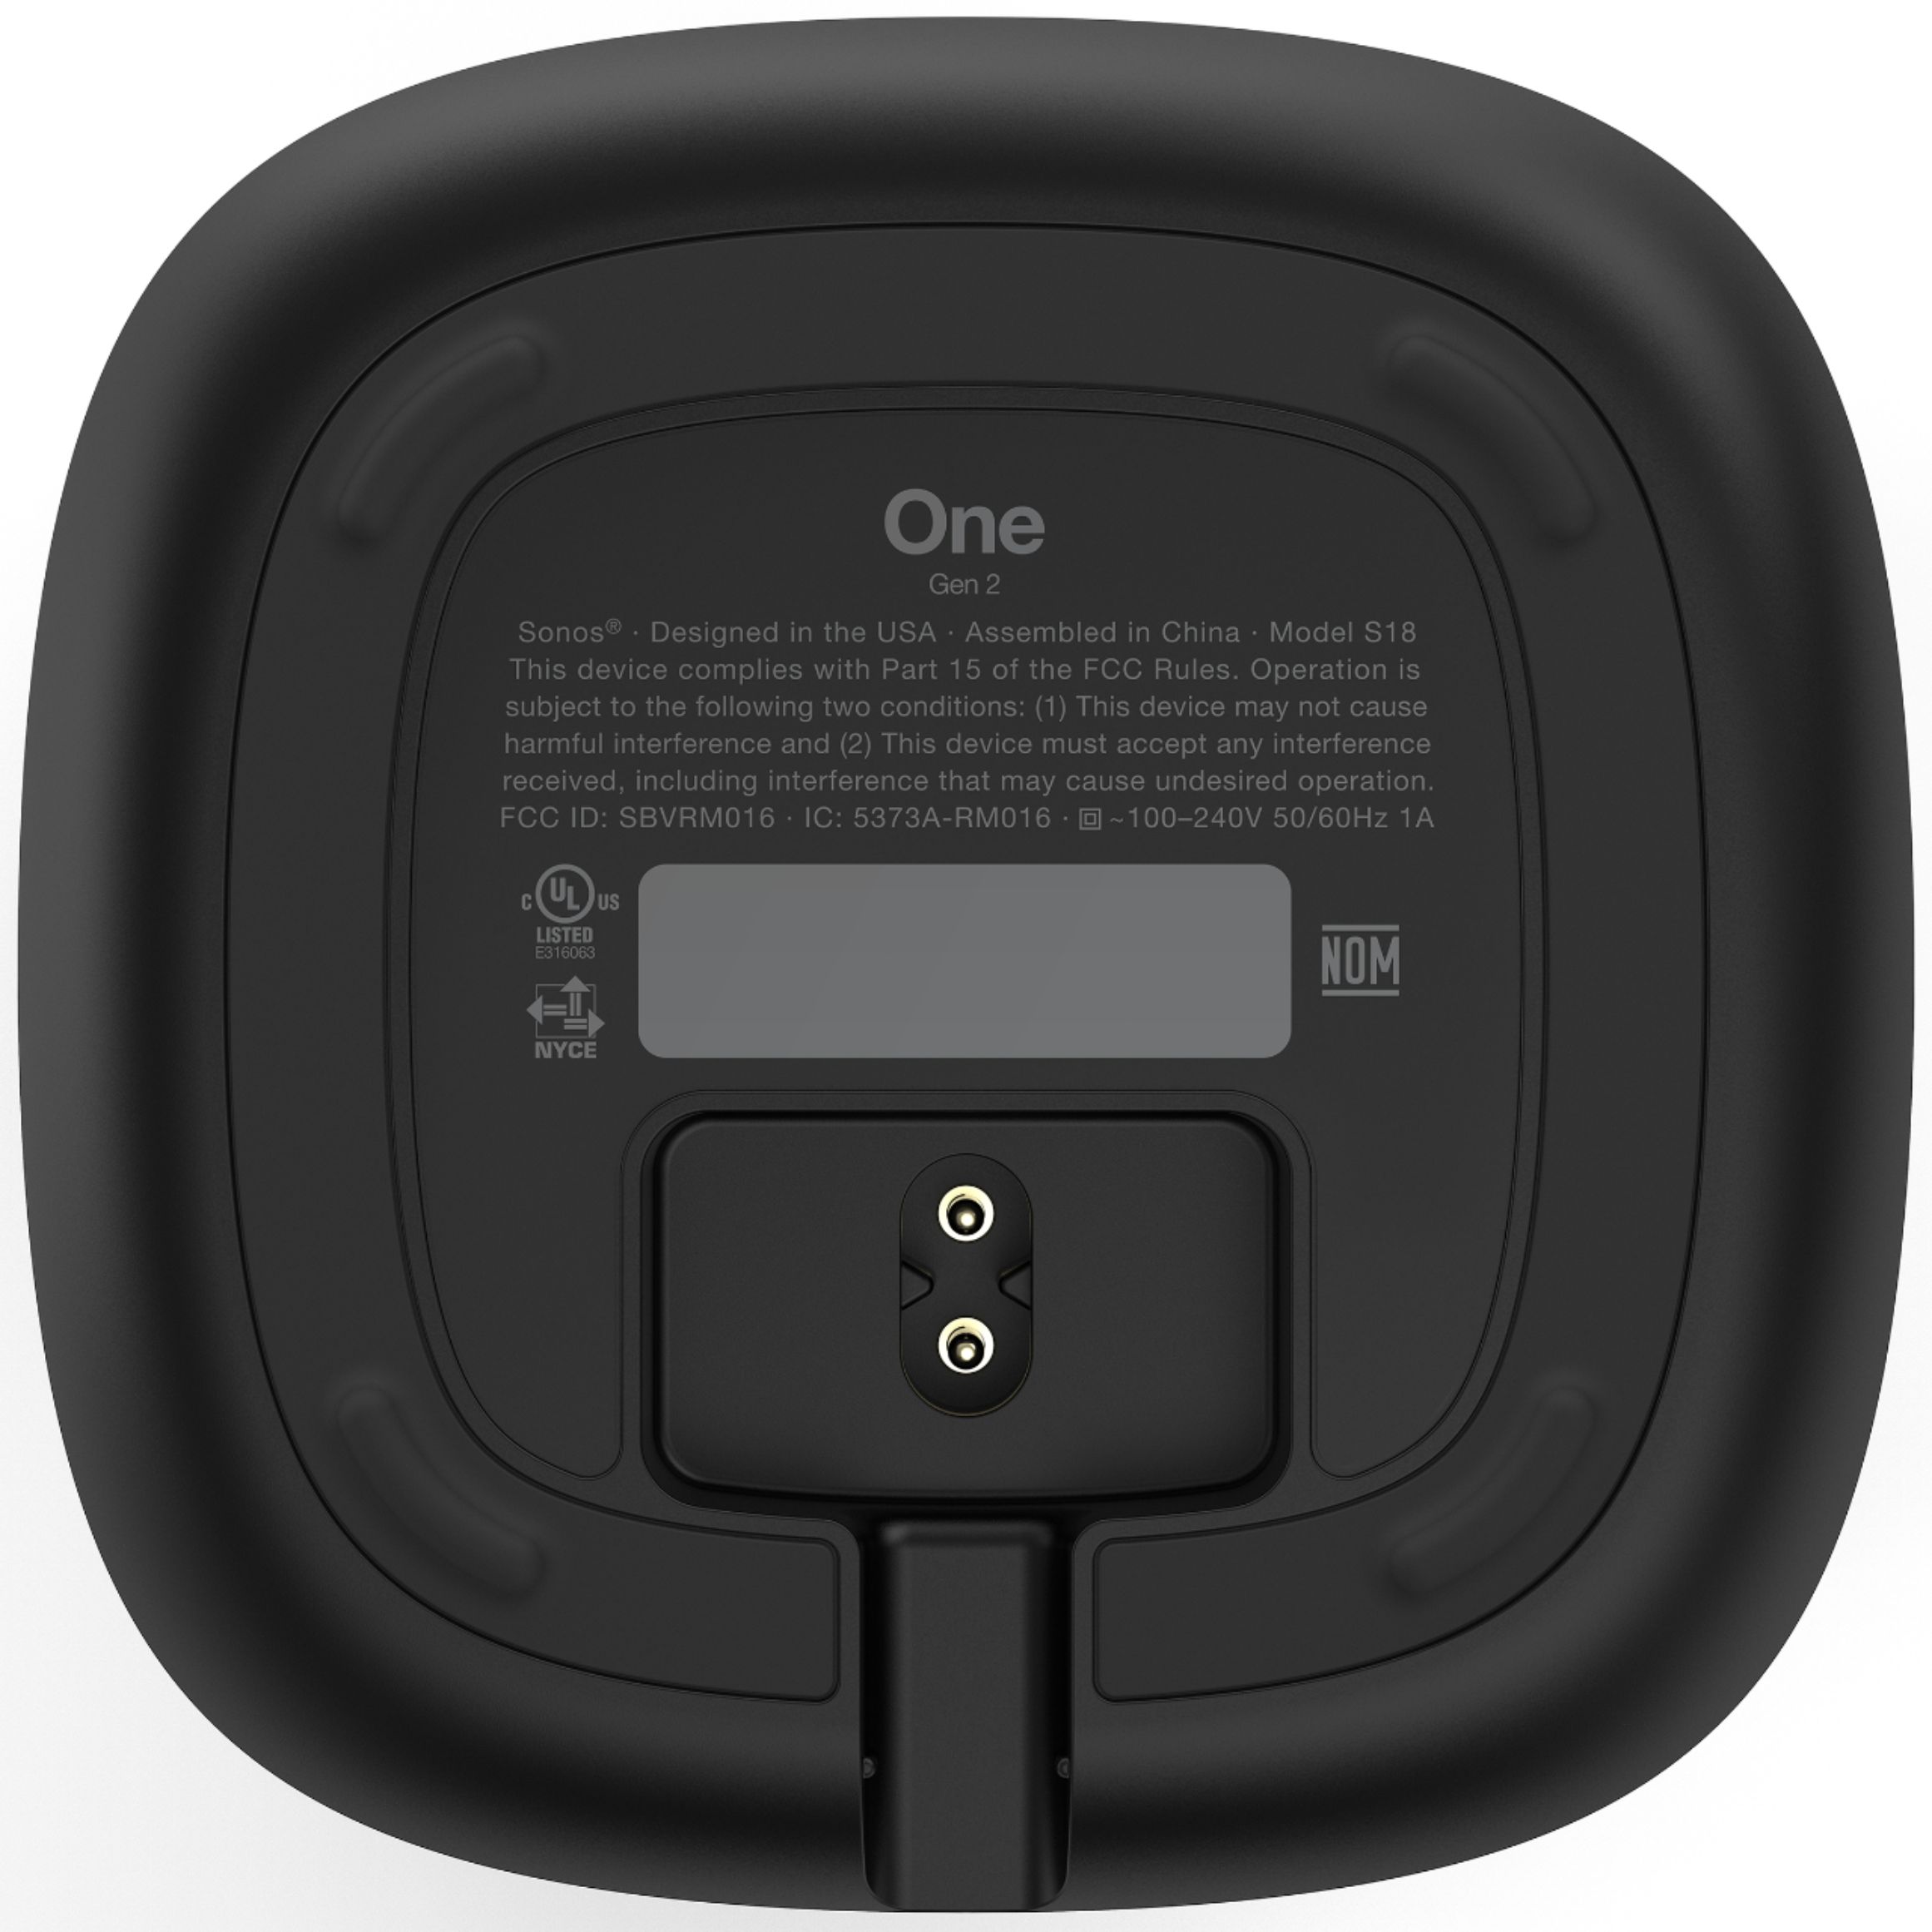 Sonos - Best Buy Voice Black Control built-in ONEG2US1BLK (Gen Speaker Smart with 2) One